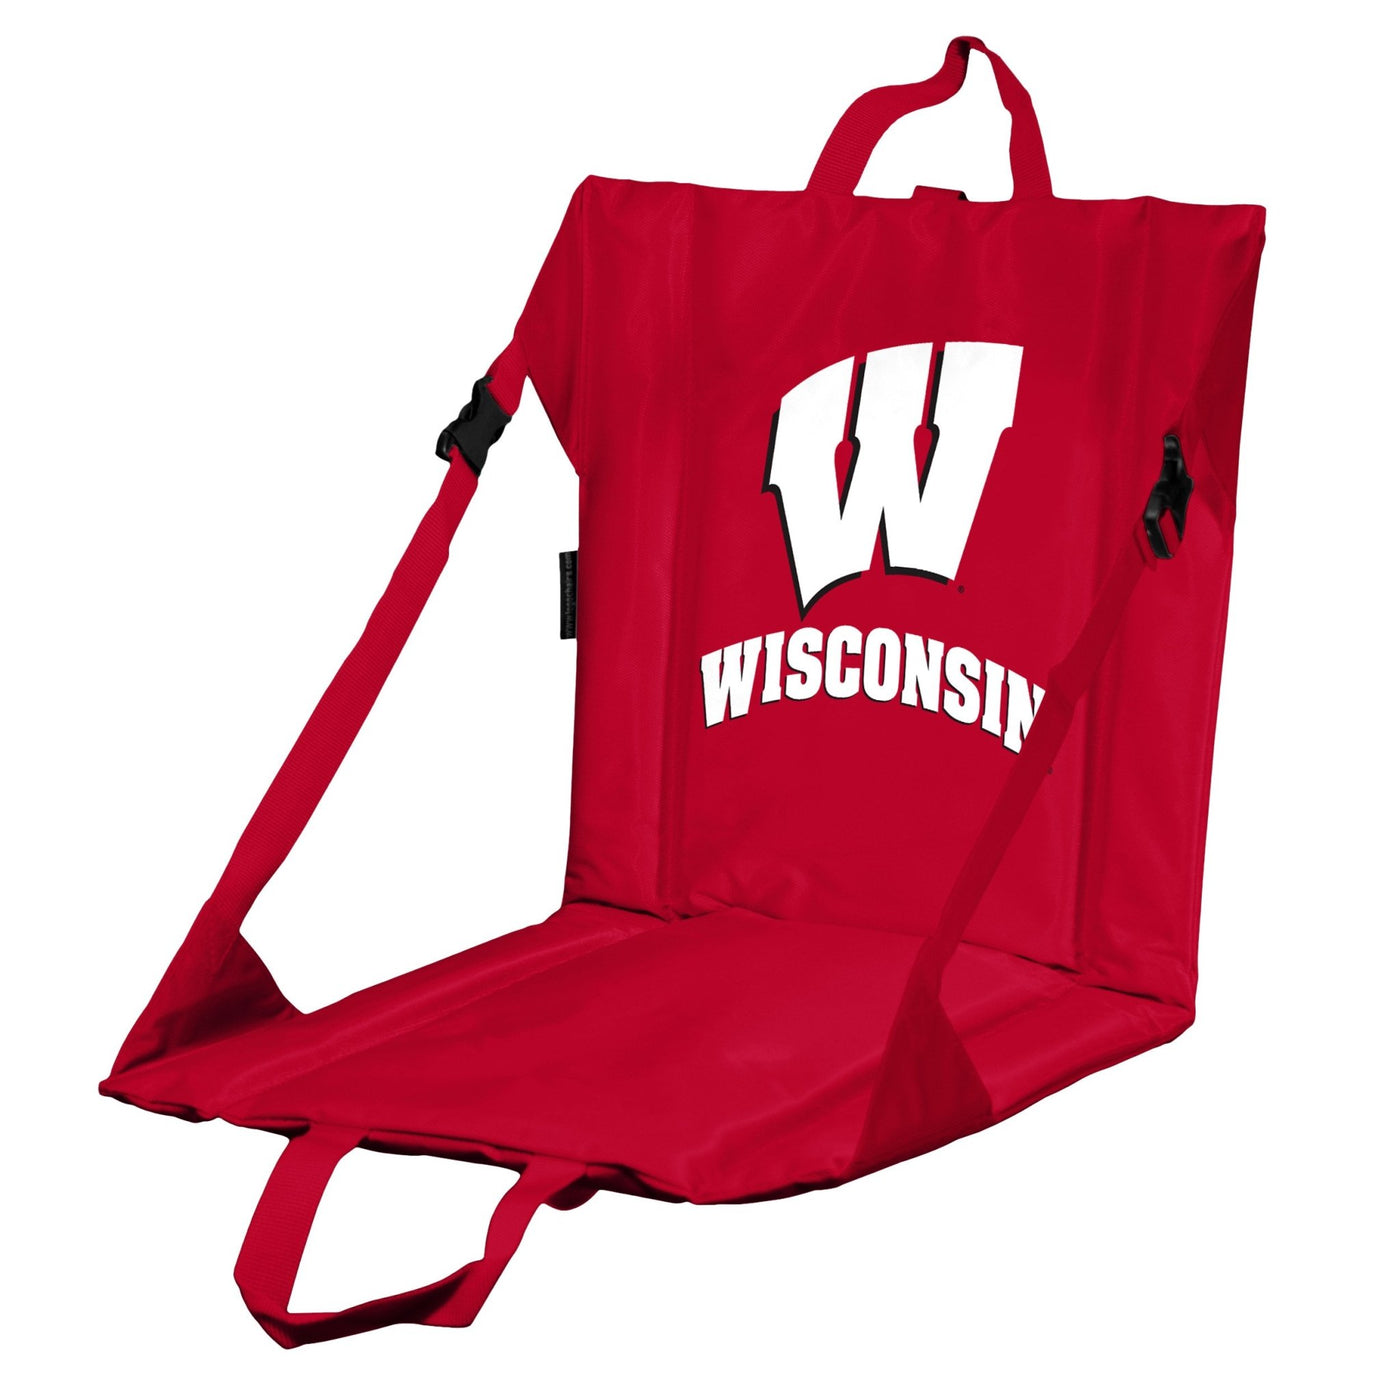 Wisconsin Stadium Seat - Logo Brands